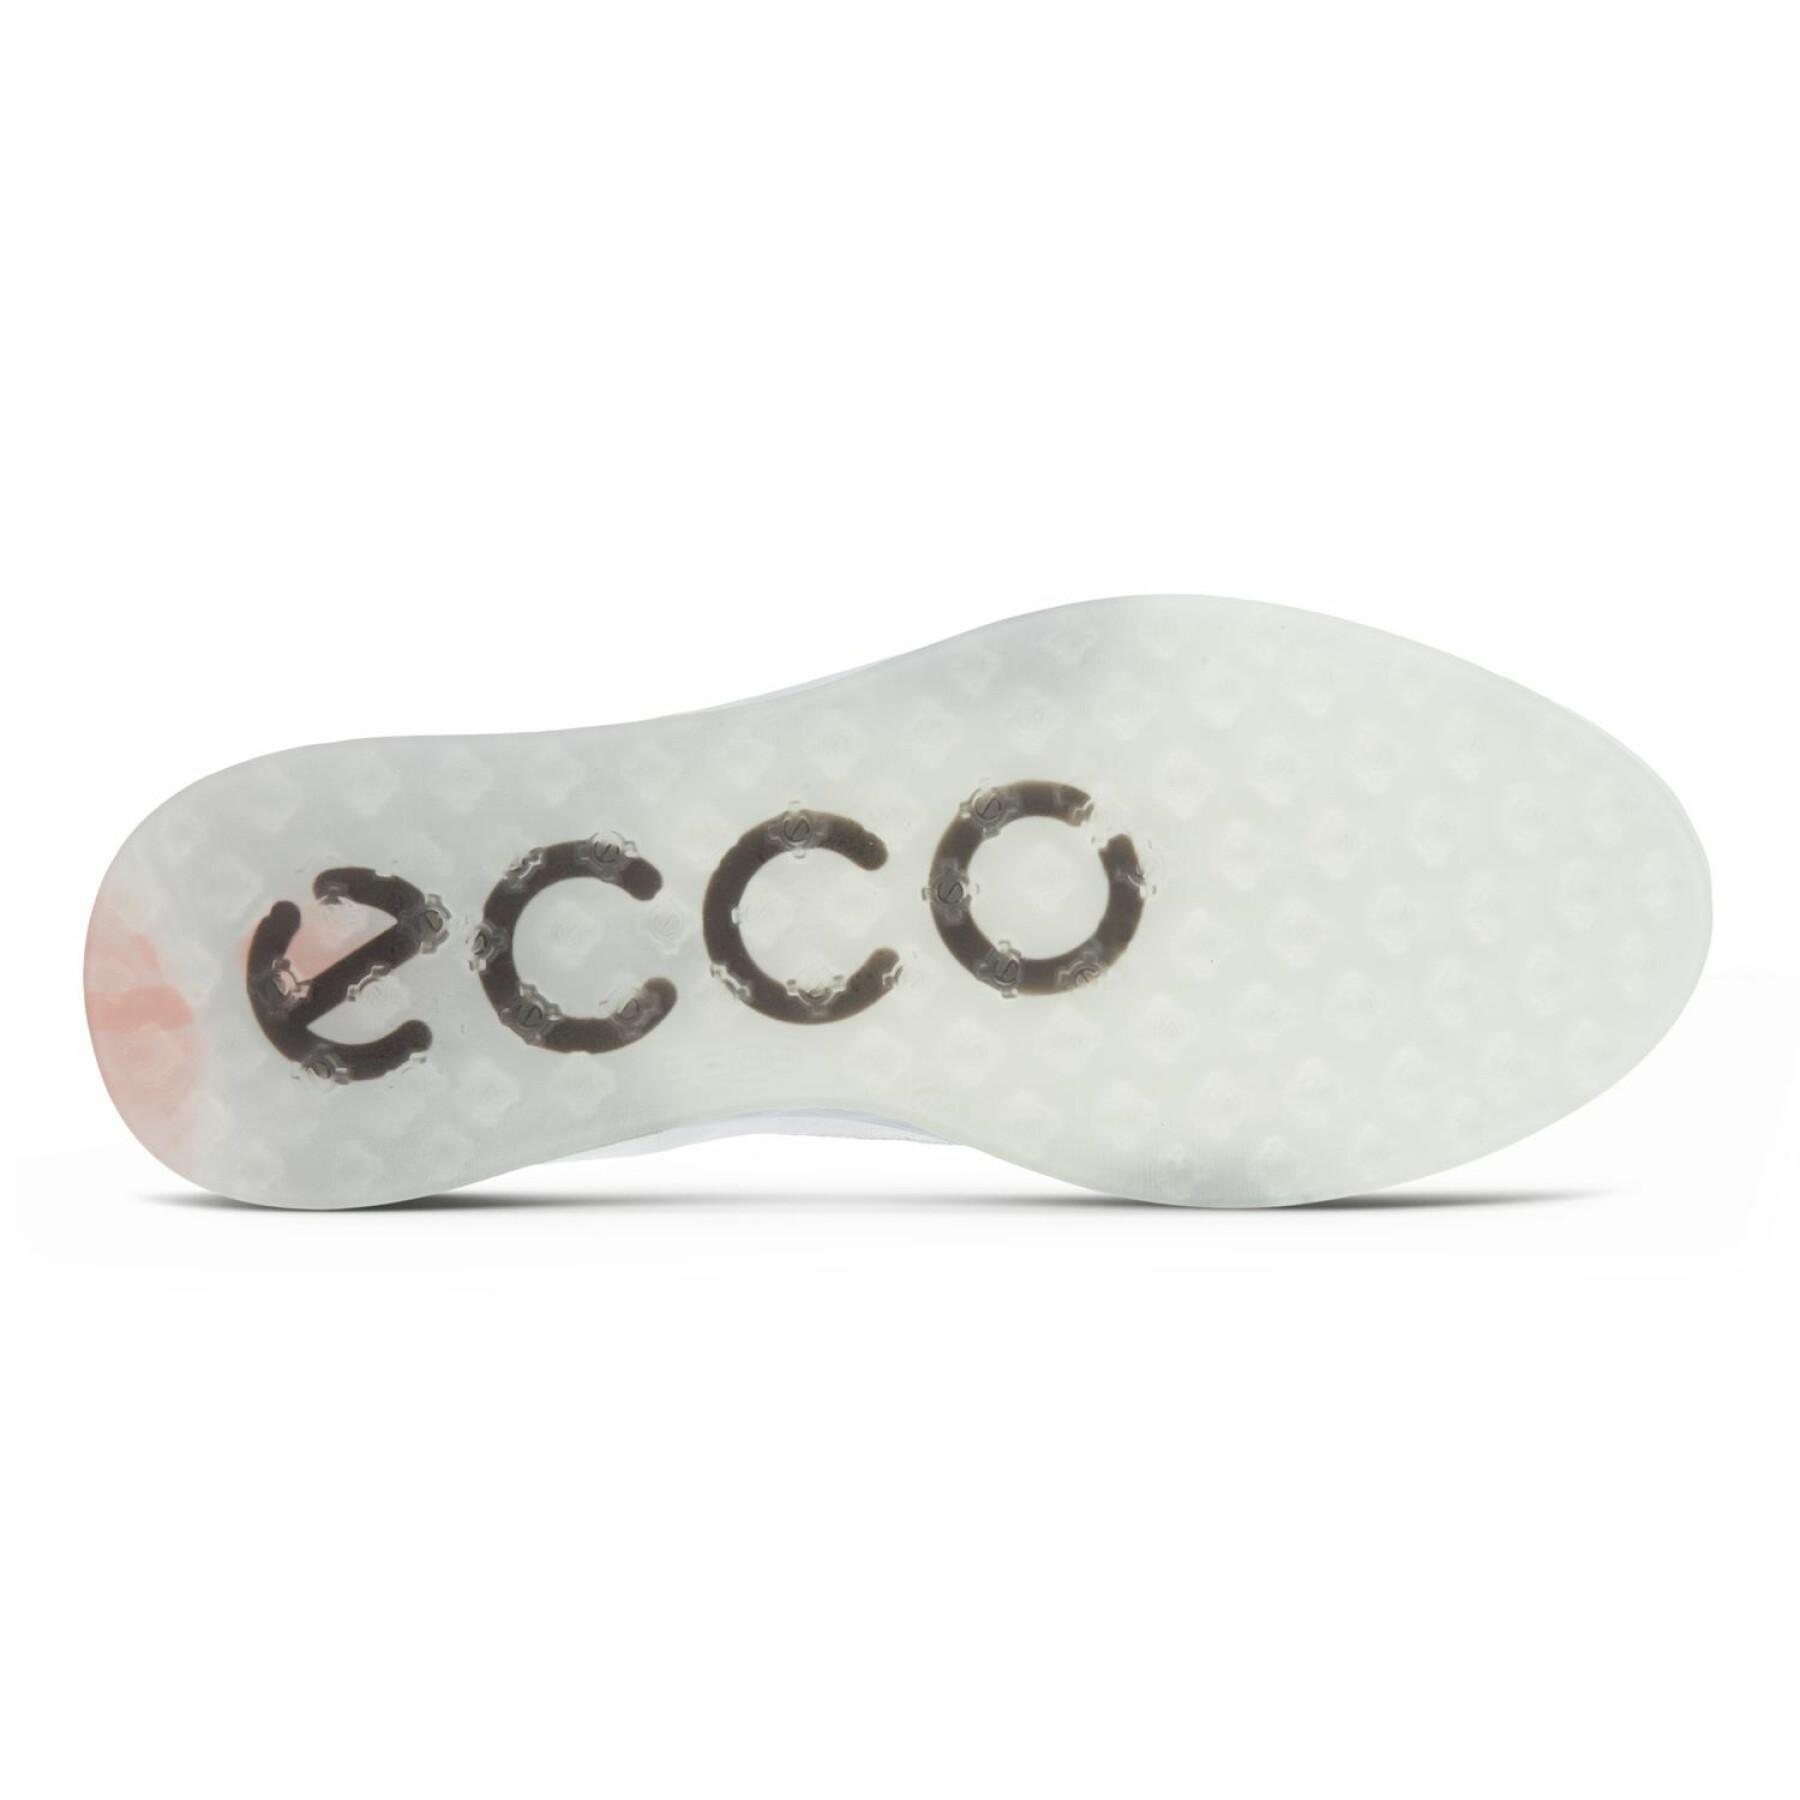 Women's golf shoes Ecco S-Three